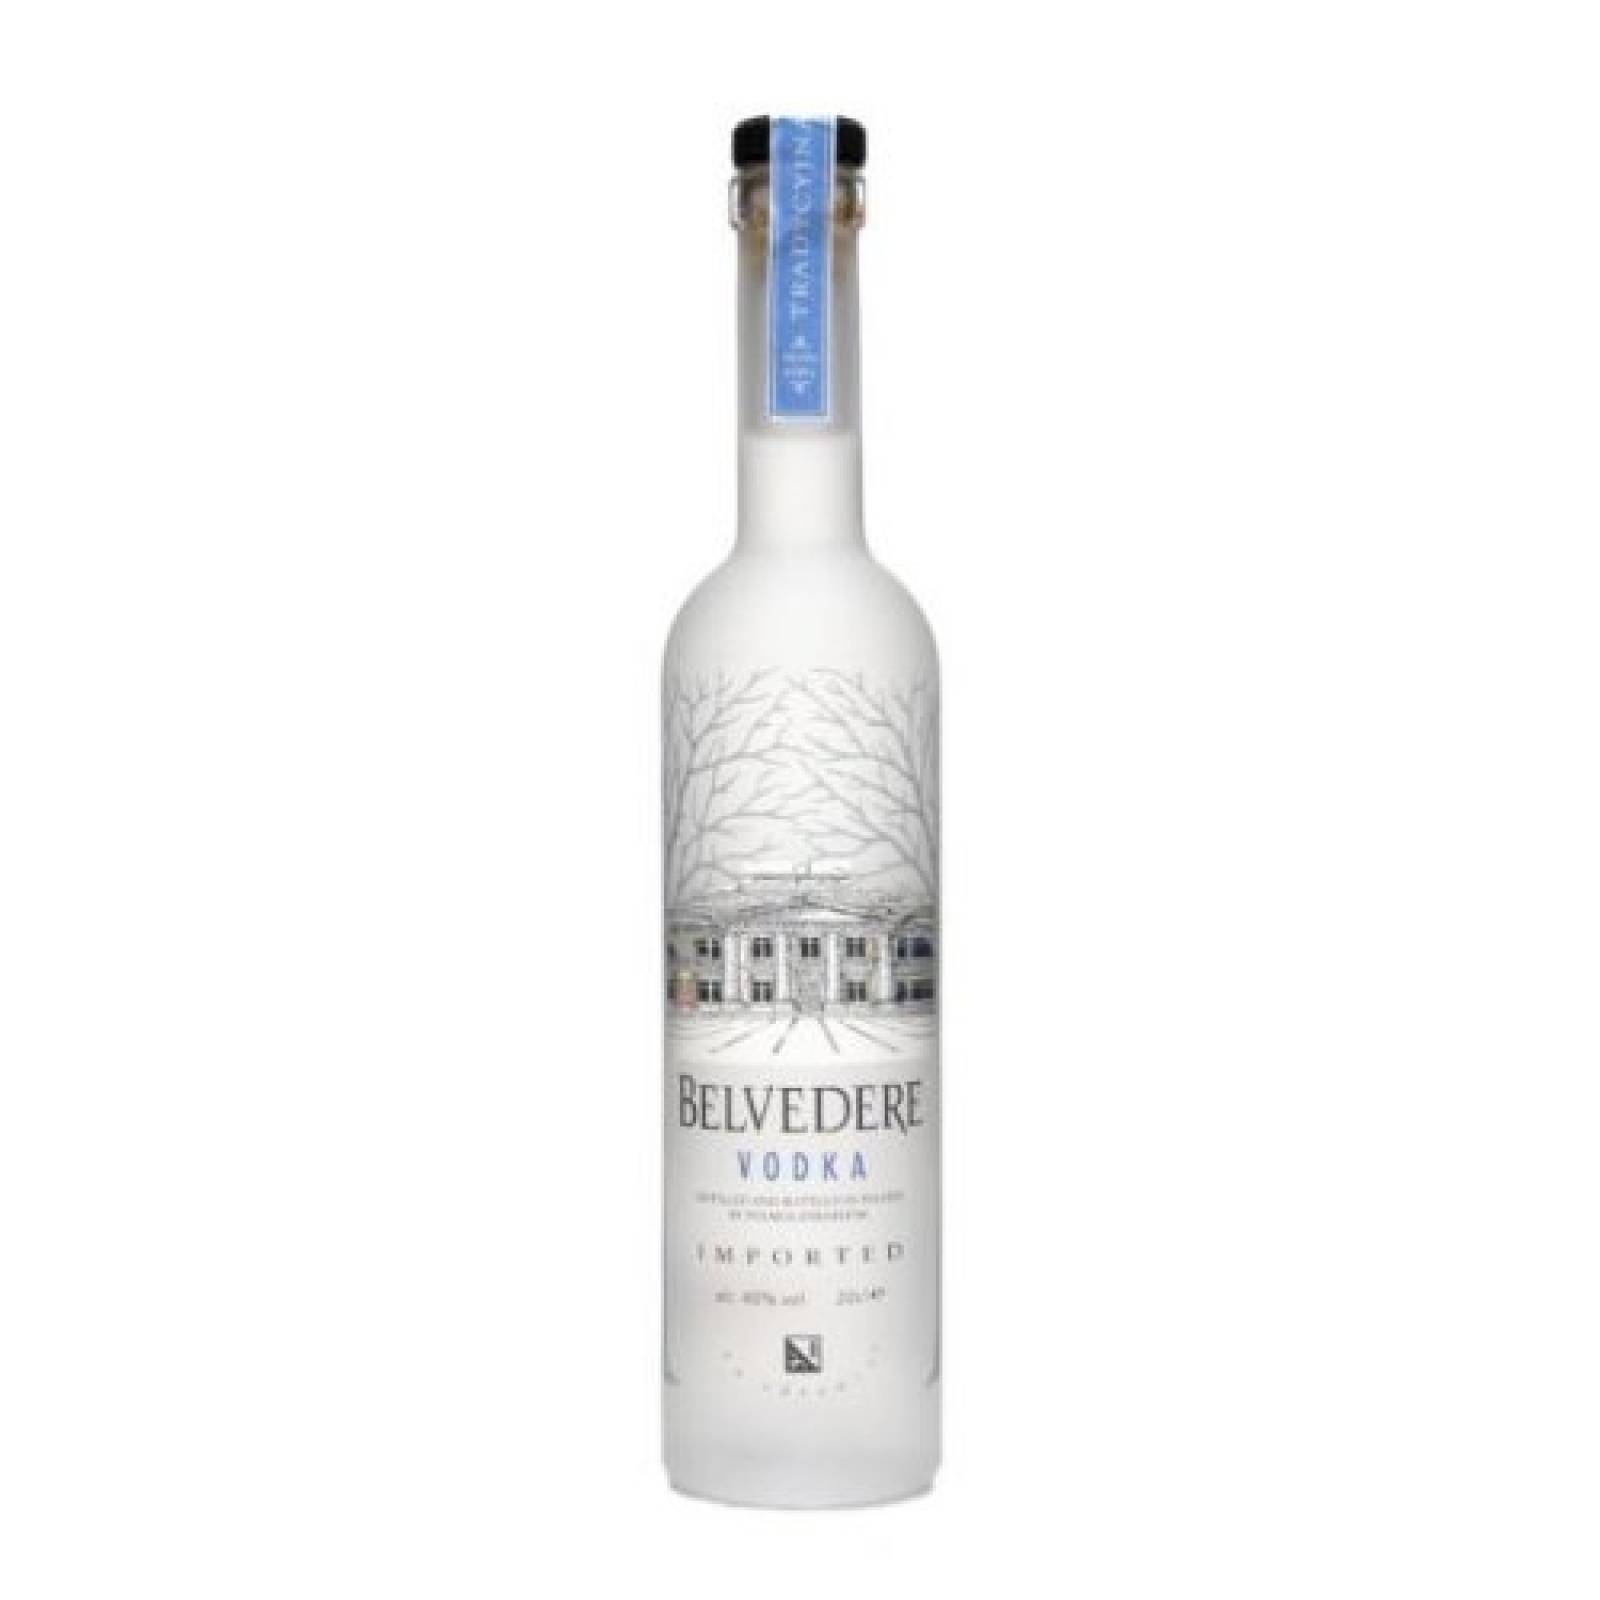 Vodka Importado Belvedere 200 Ml.